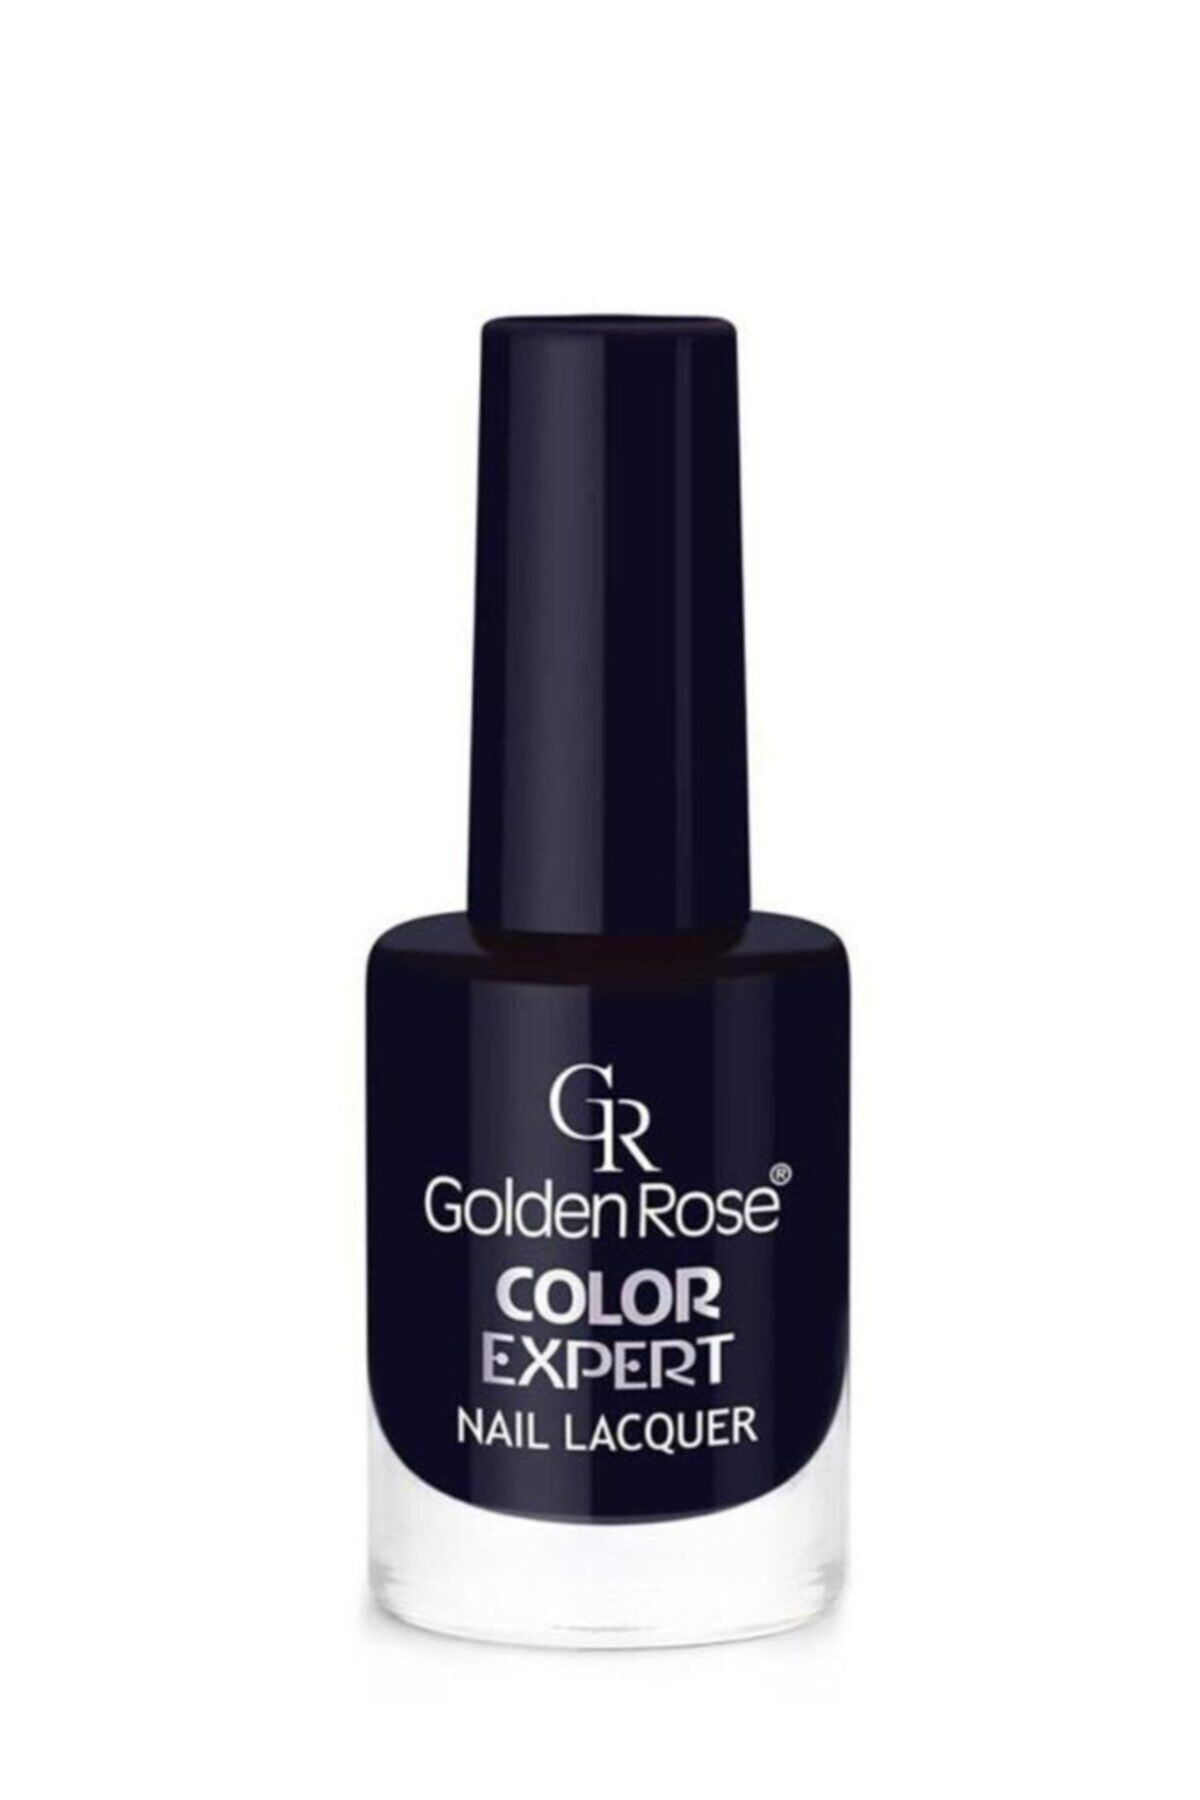 Golden Rose Oje - Color Expert Nail Lacquer No: 86 8691190703868 Ogcx